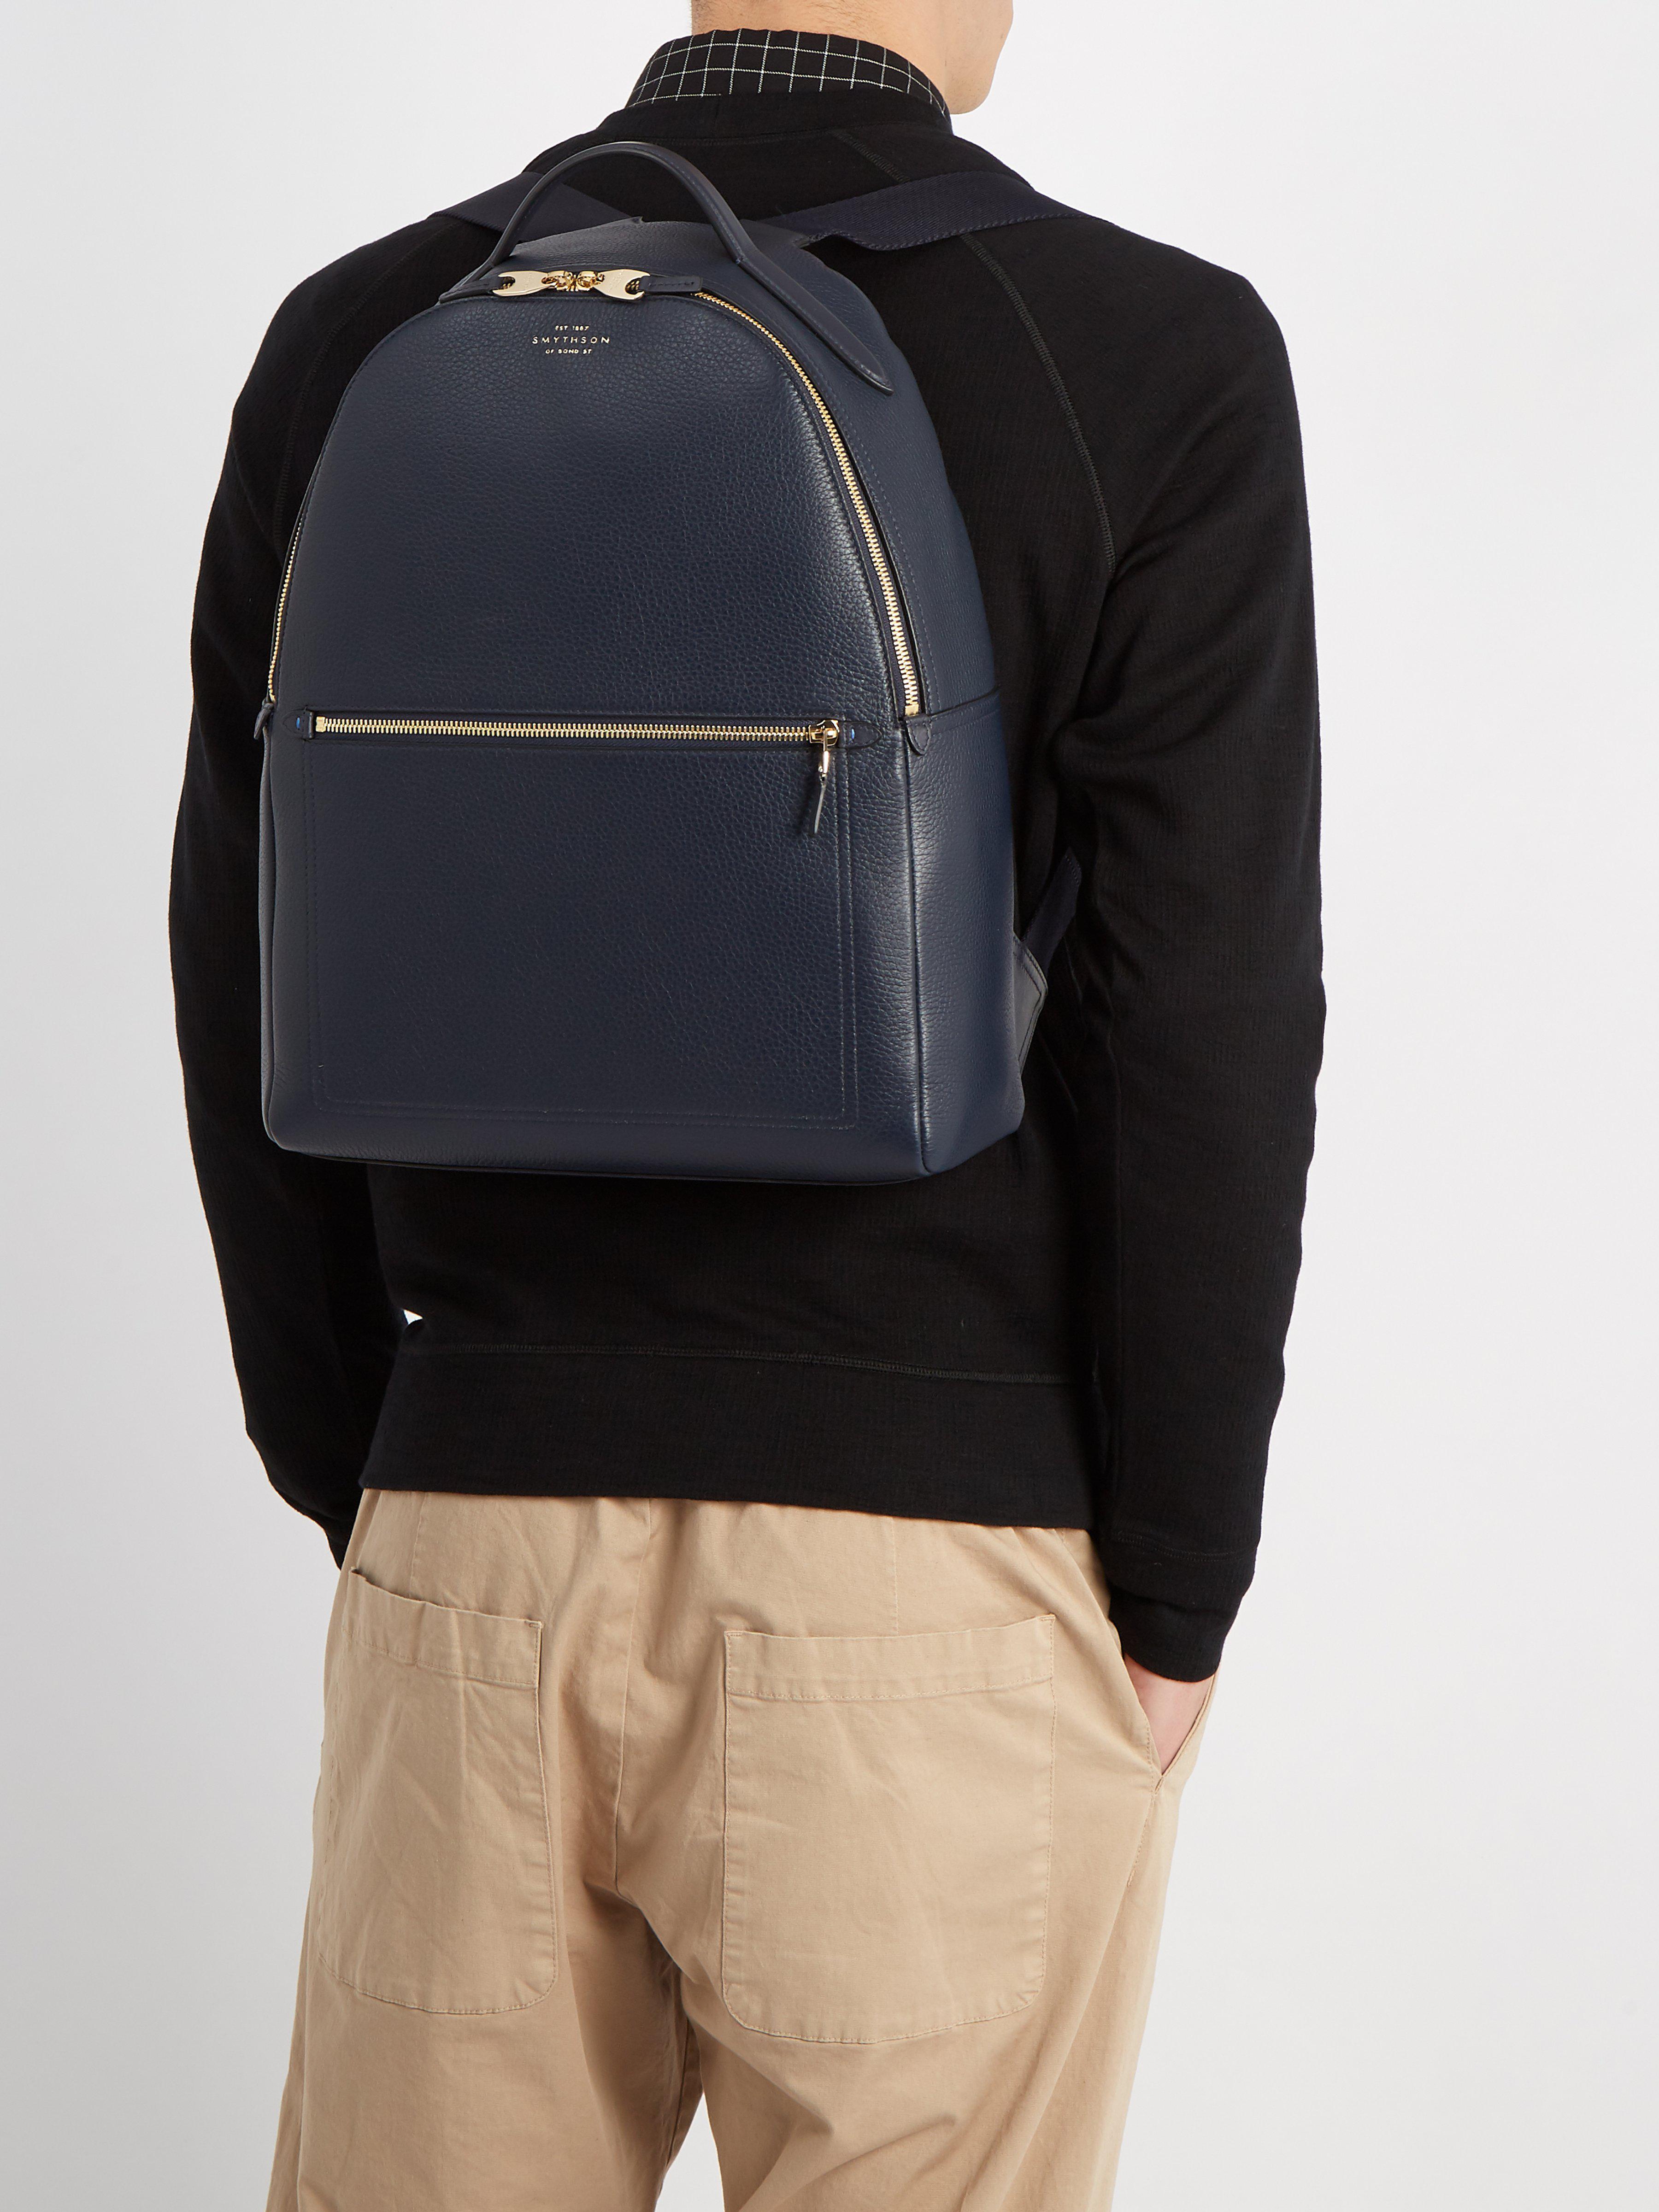 adidas backpack burlington